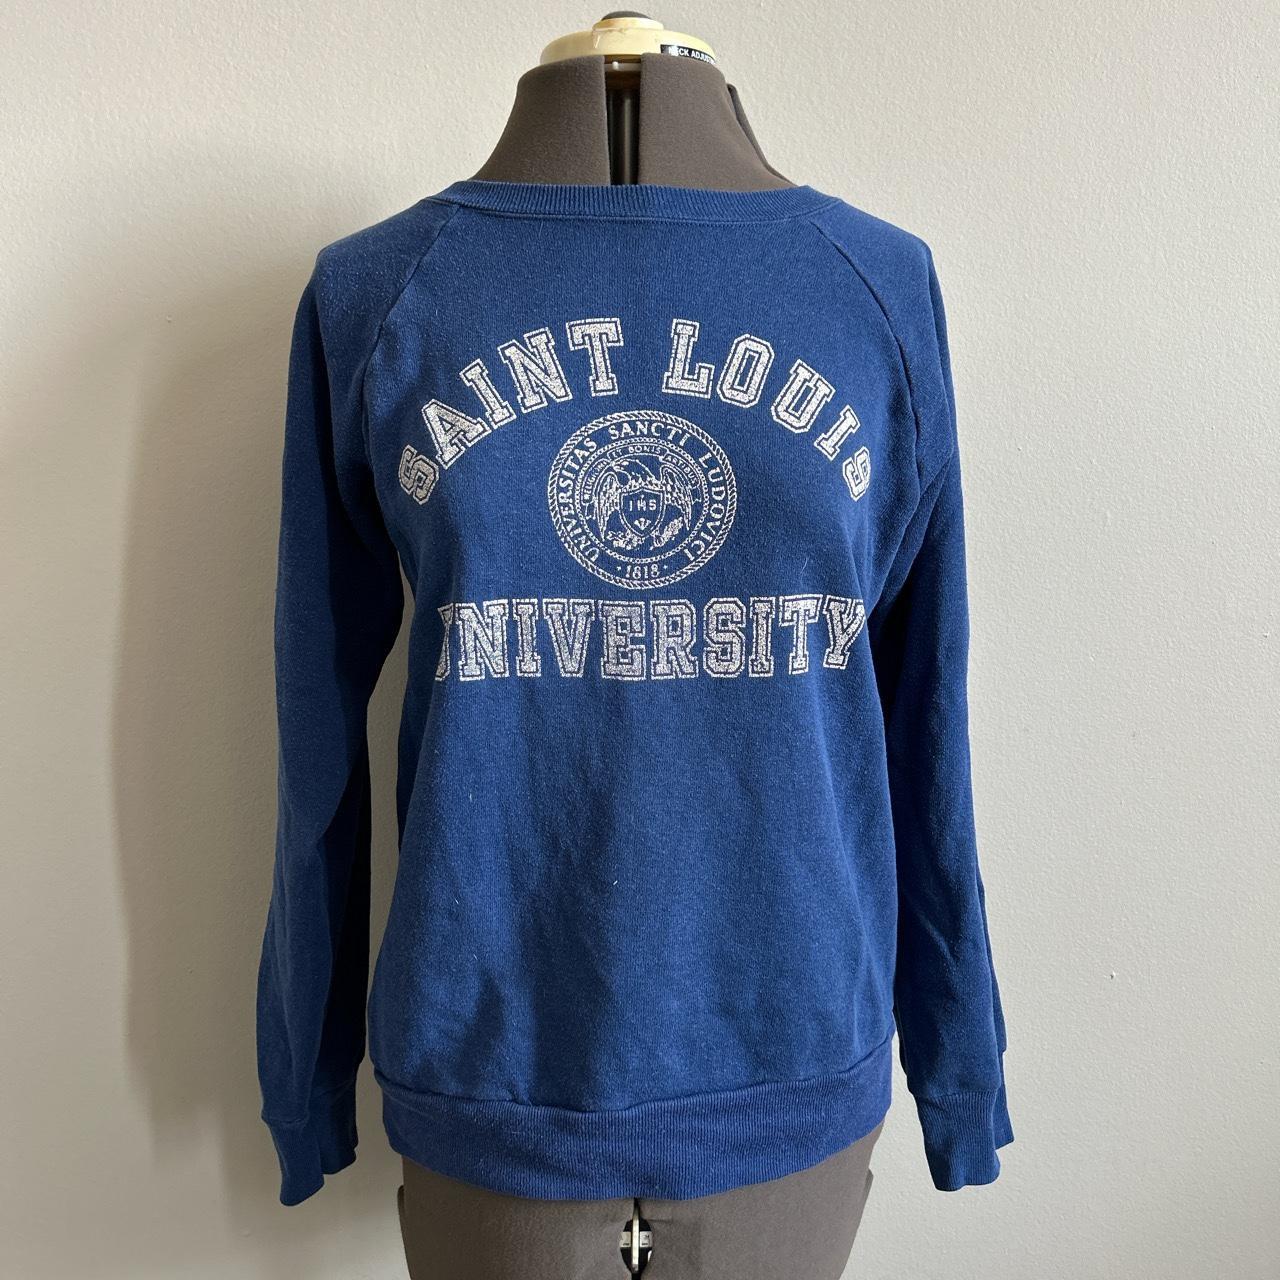 Vintage St. Louis Blues Sweatshirt (1980s) 